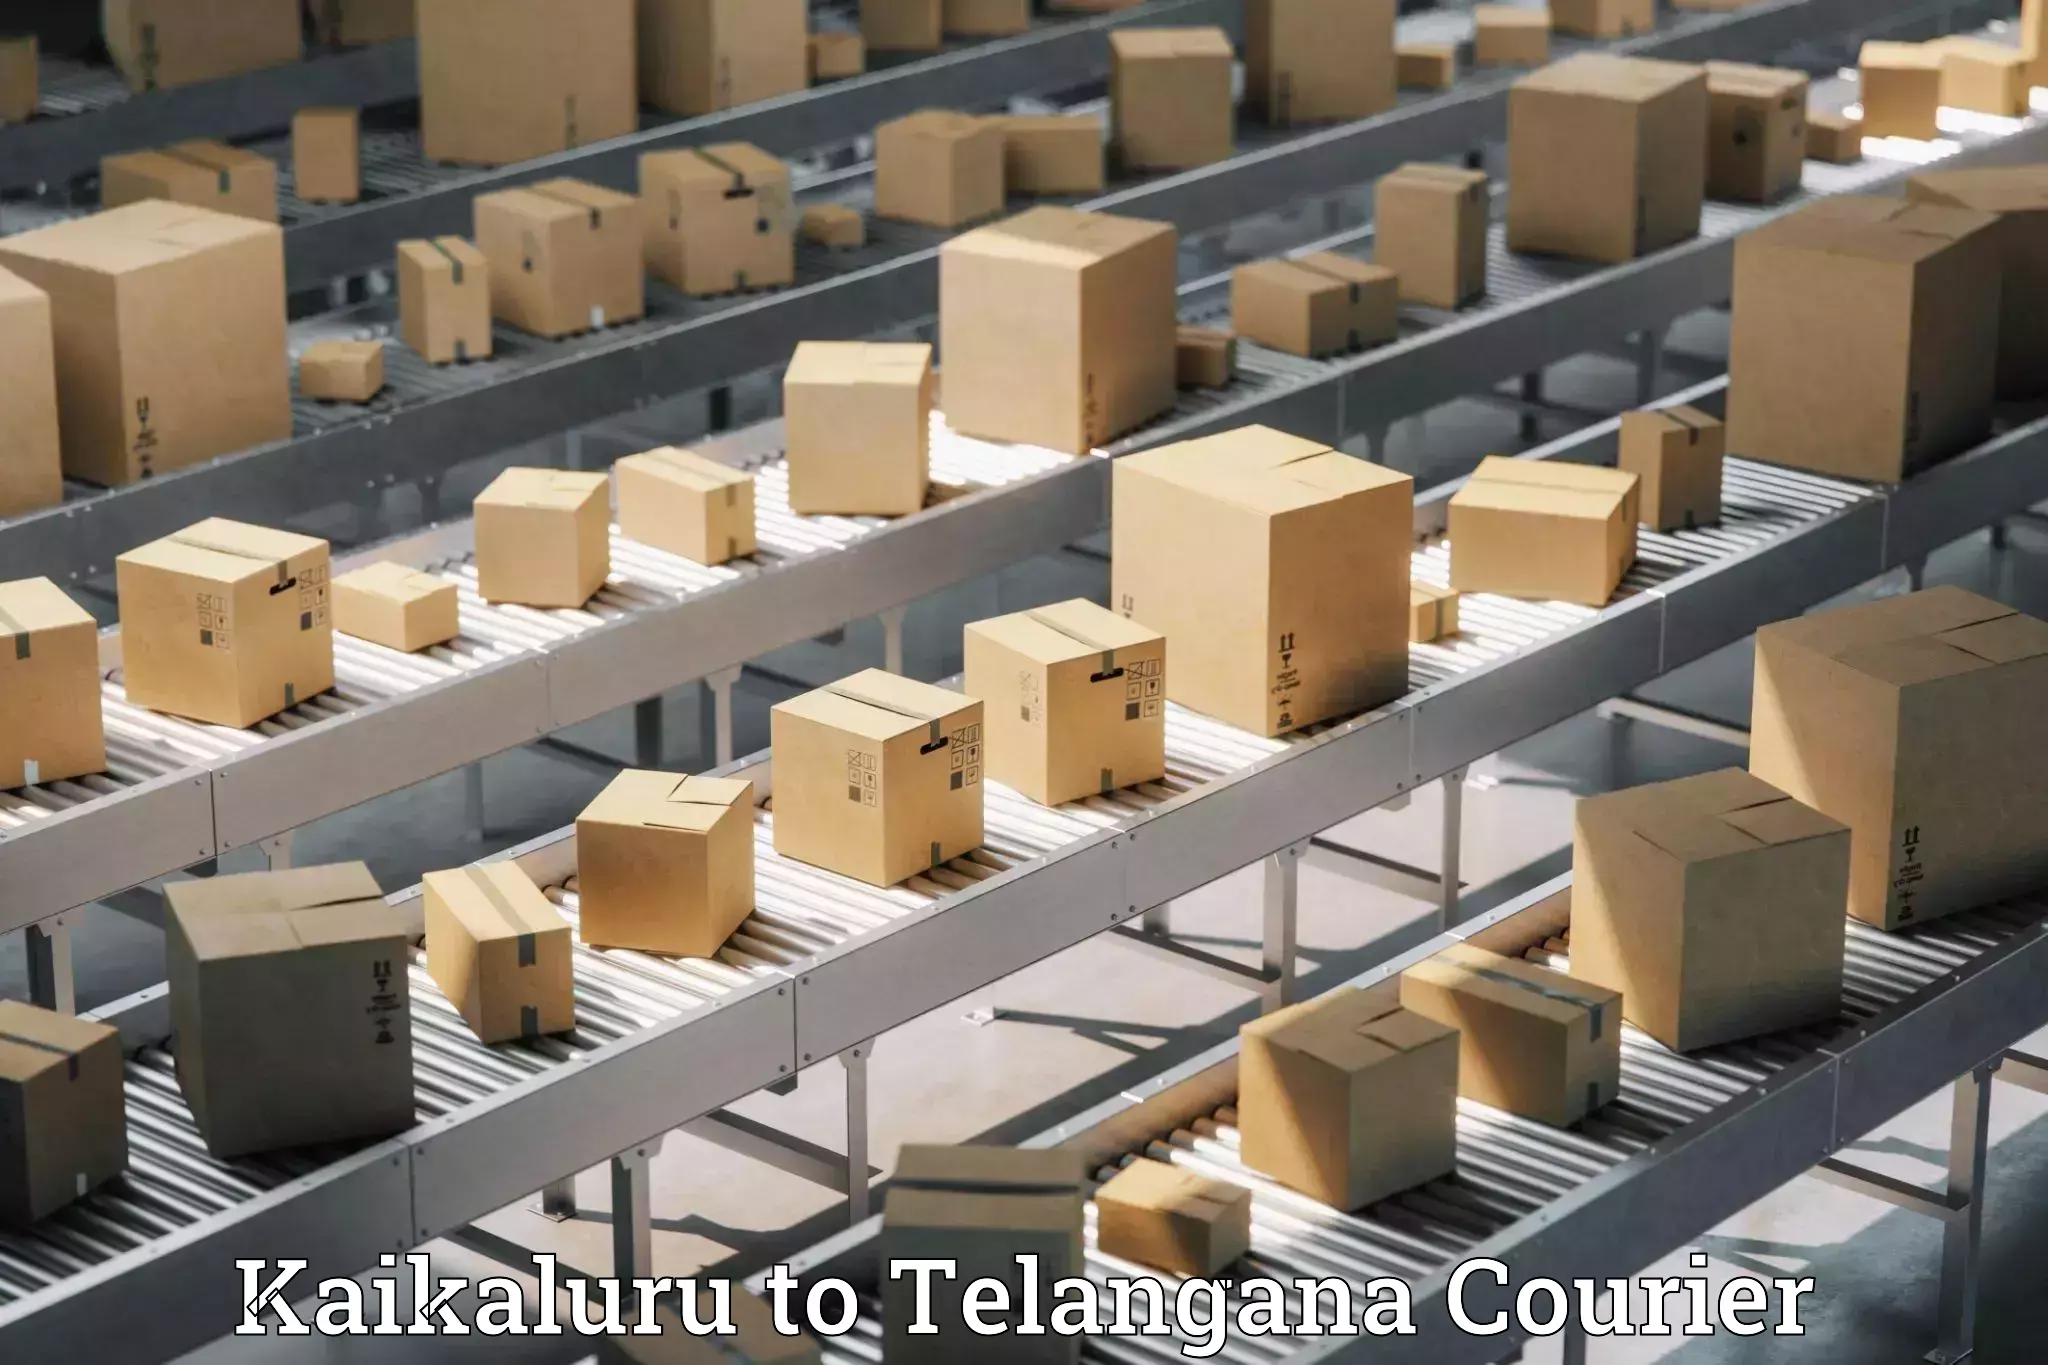 Logistics service provider Kaikaluru to Manneguda